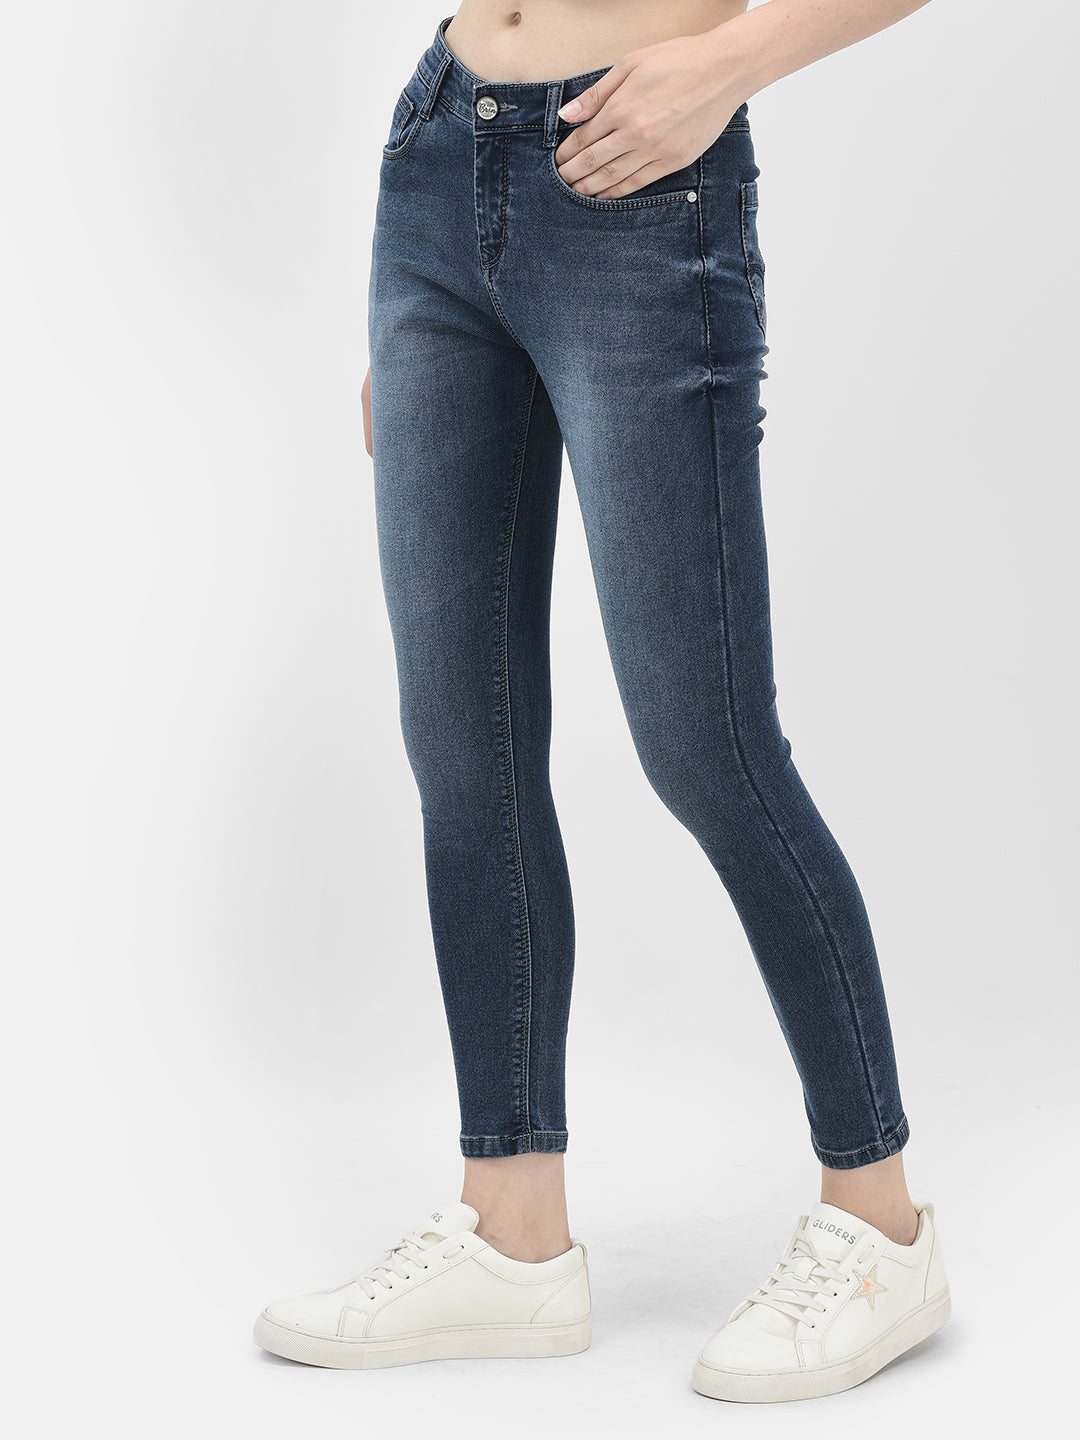 Blue Skinny Stretchable Jeans-Women Jeans-Crimsoune Club